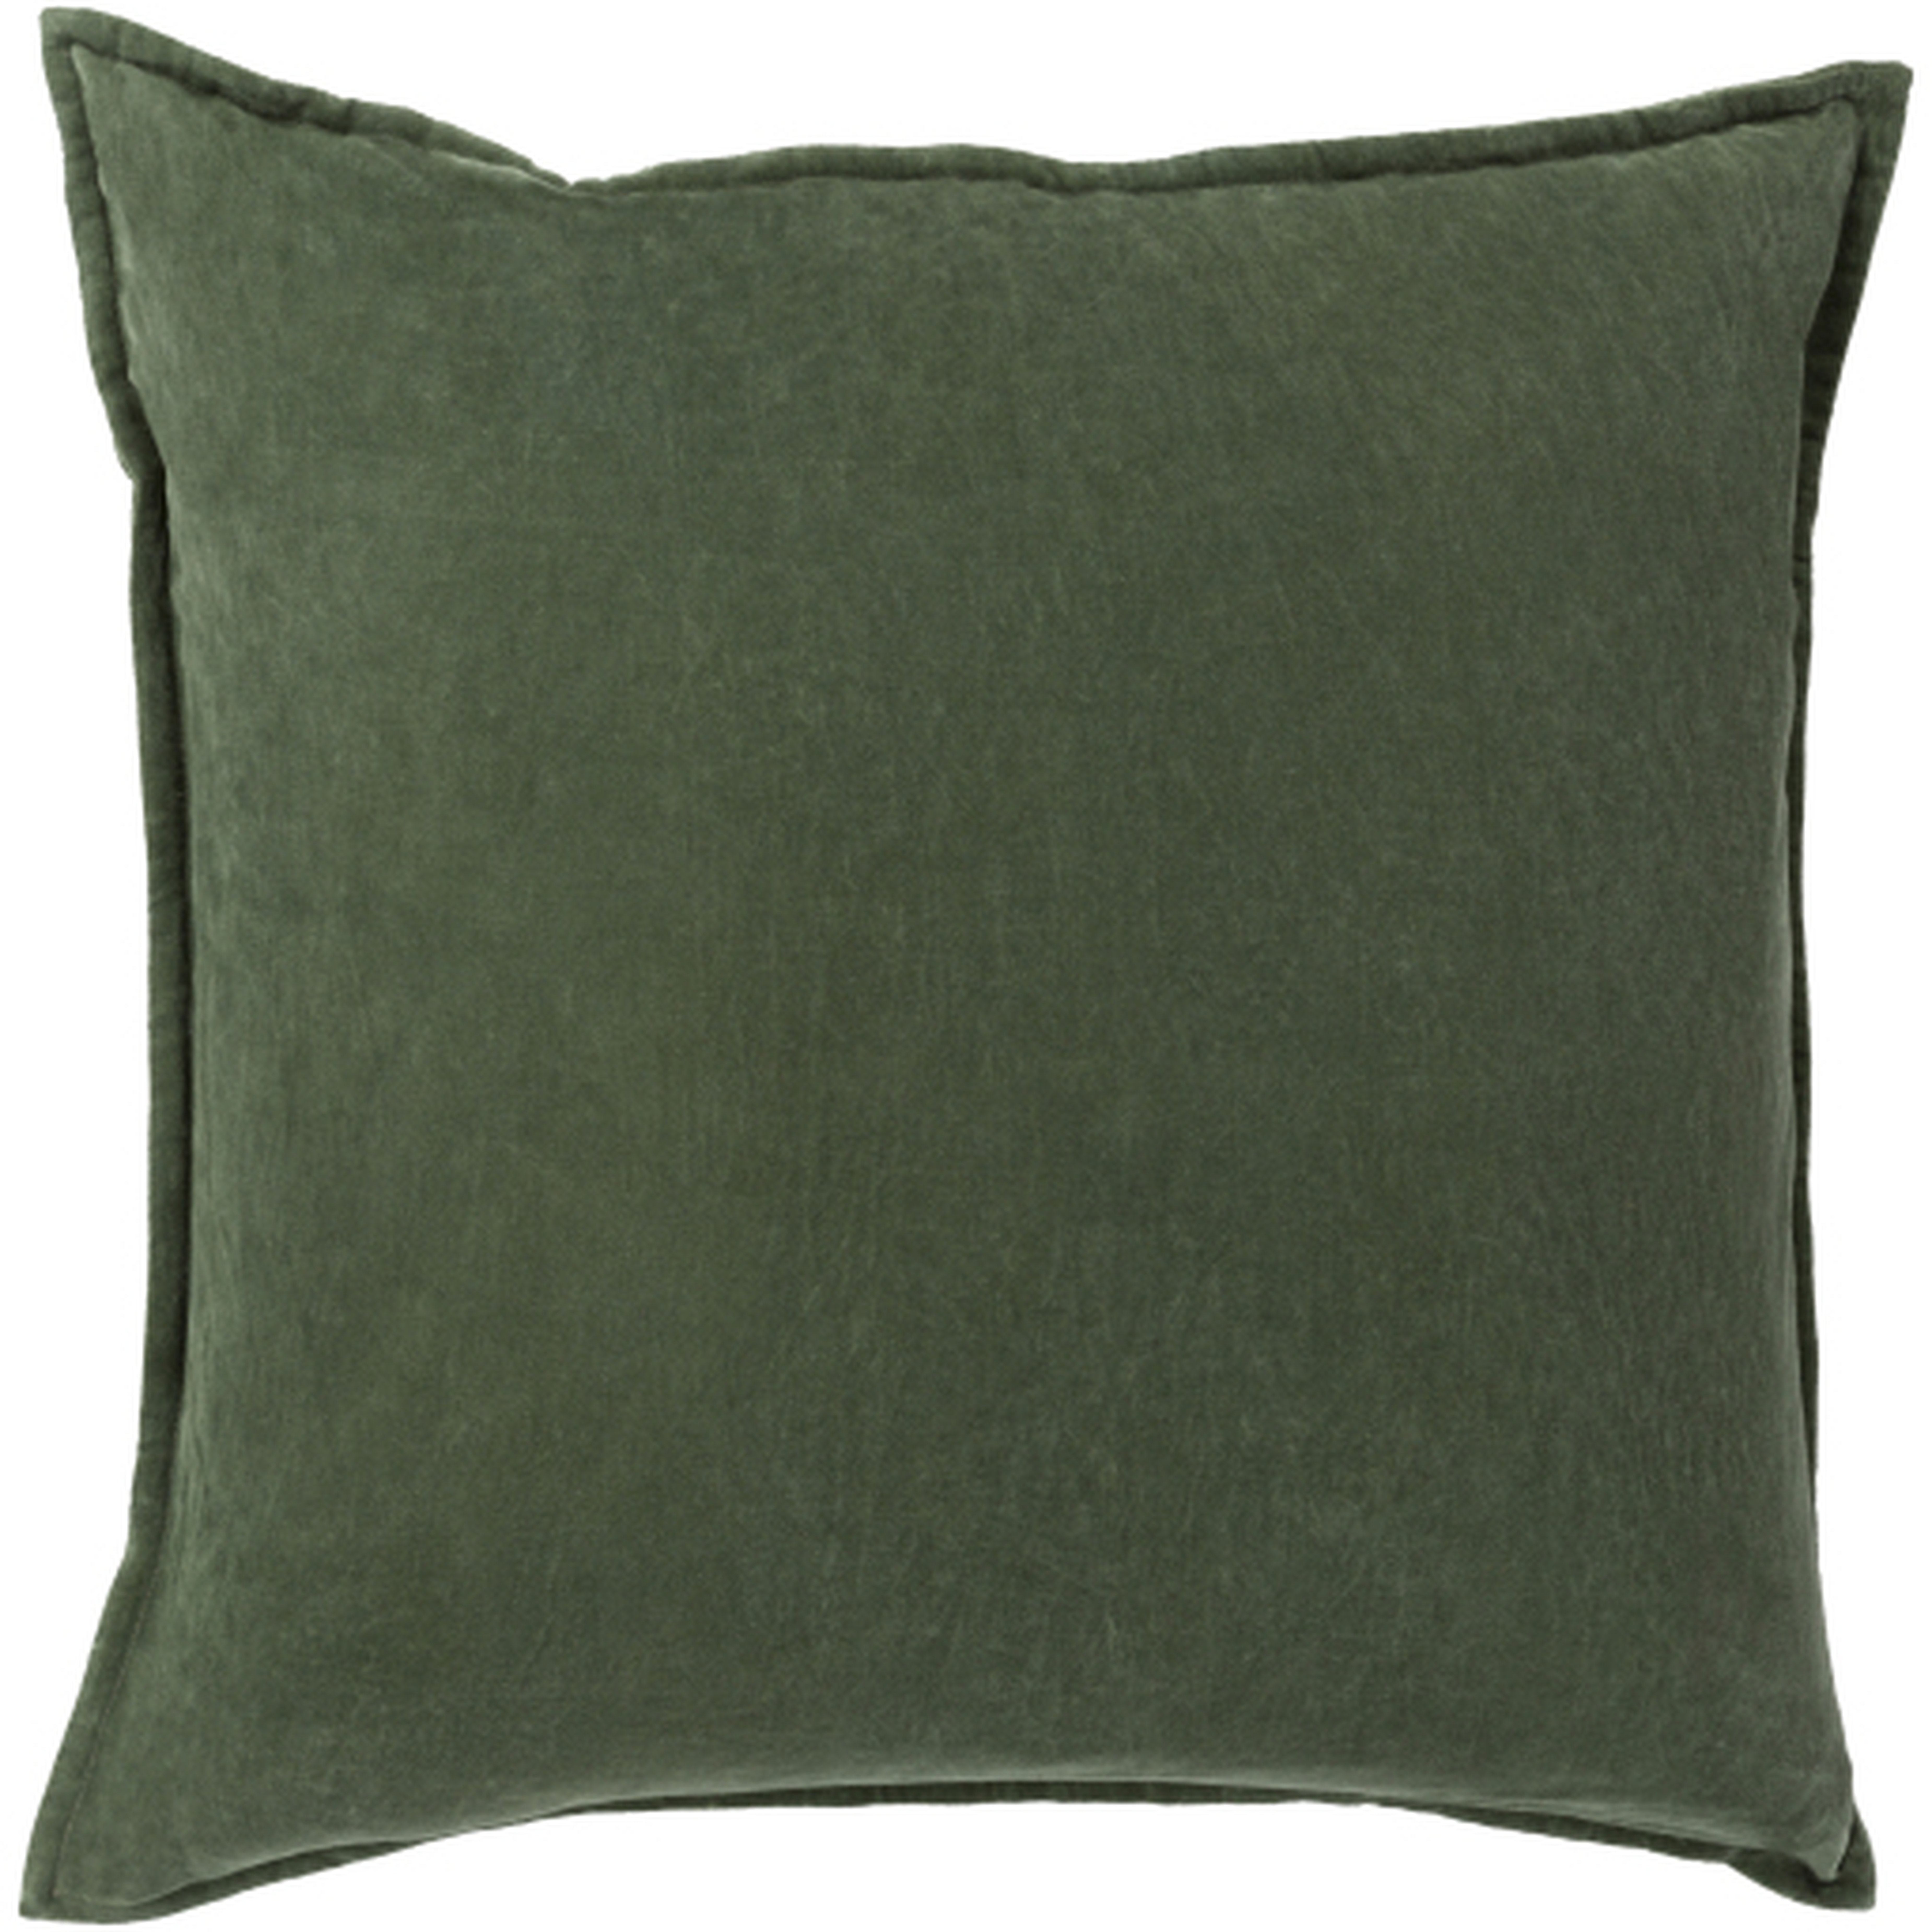 Cotton Velvet Pillow, 20" x 20", Green, Down - Surya